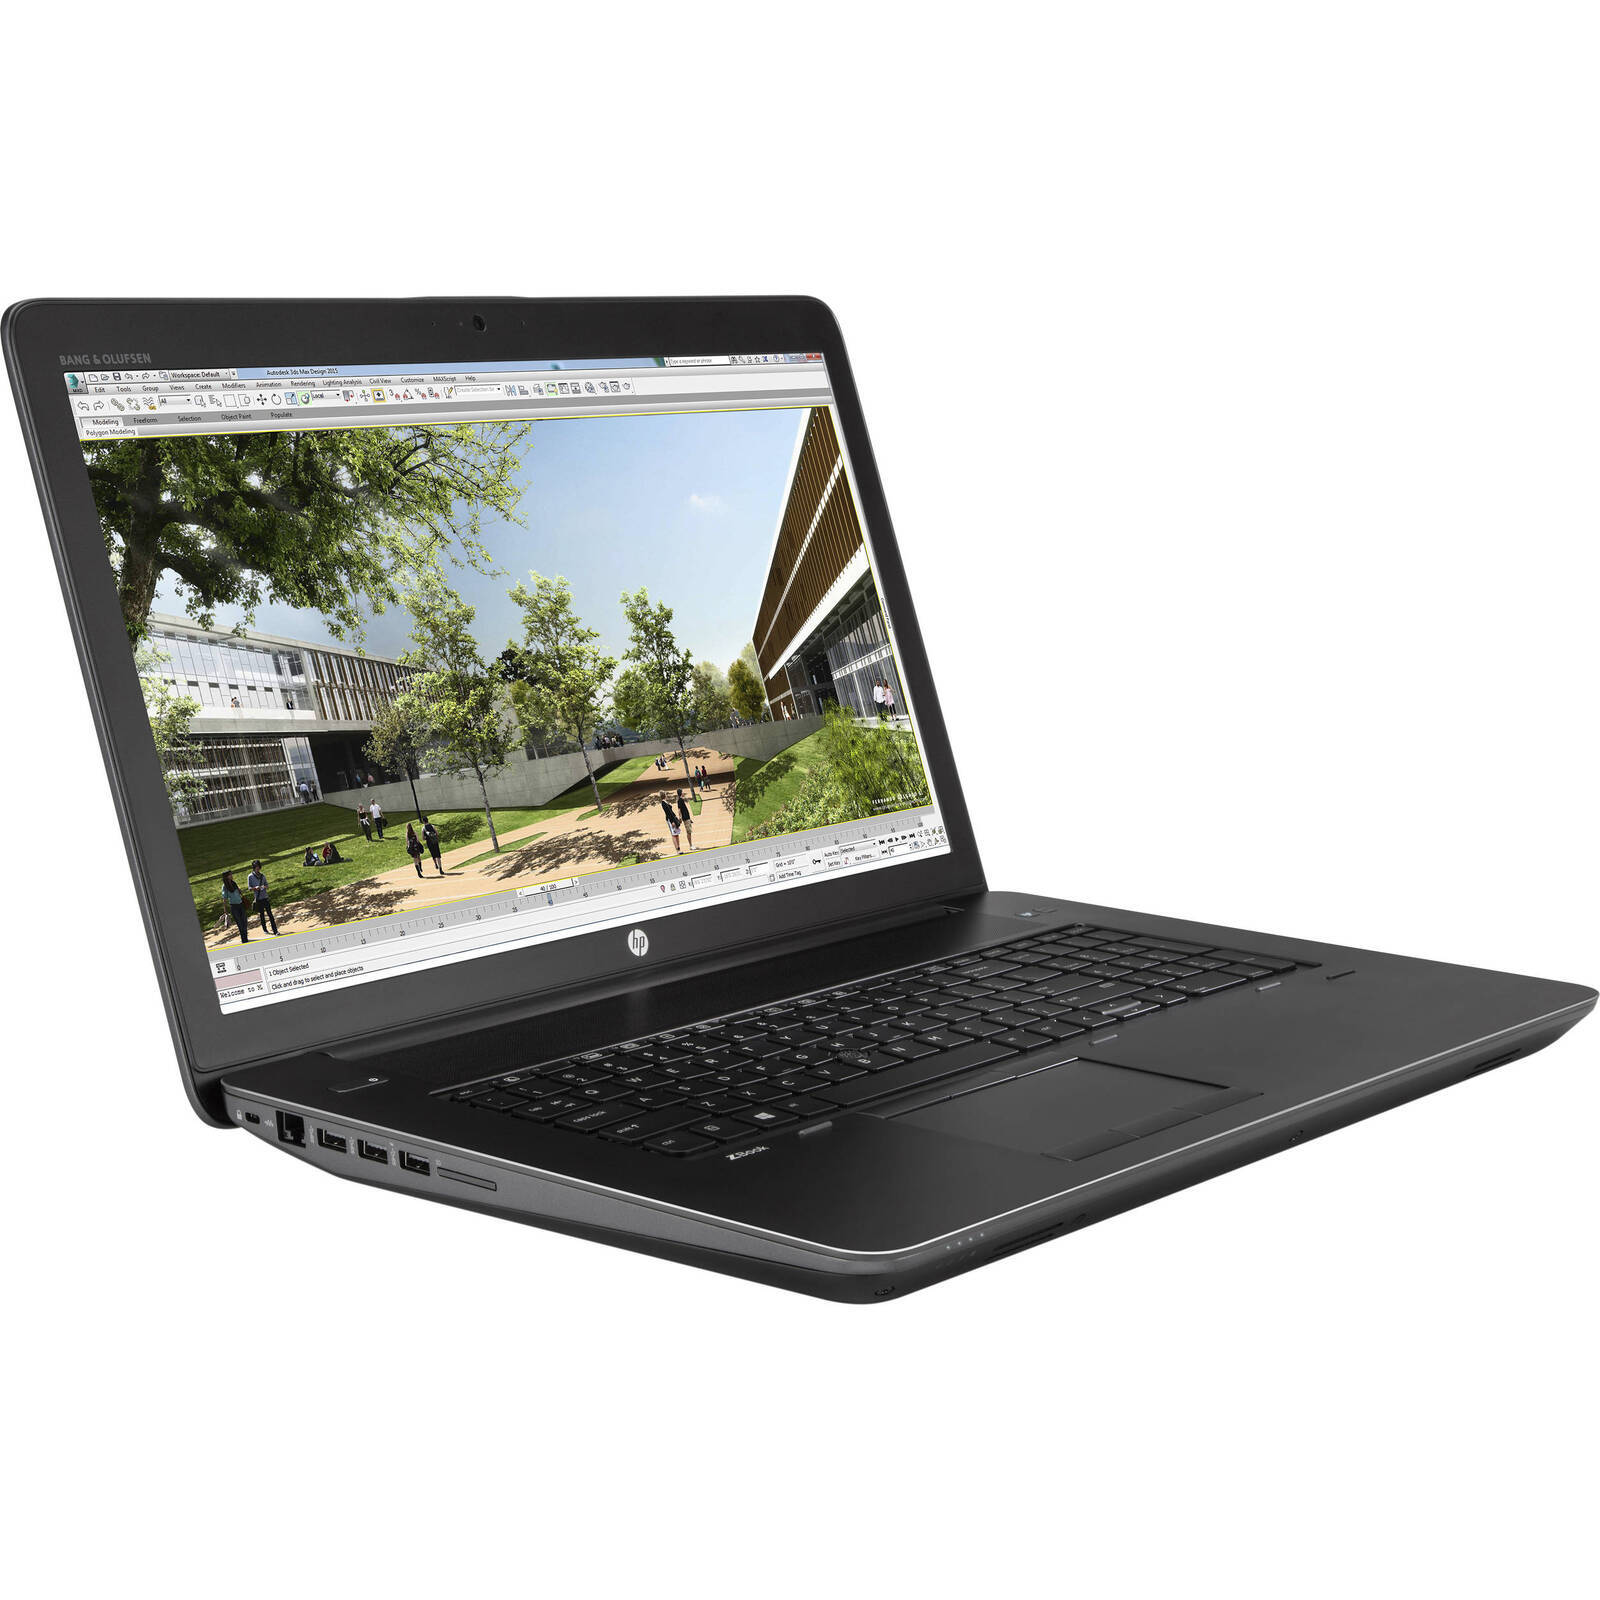 HP ZBook 17 G4 Intel Xeon E3-1505M v6 3.0GHz 16GB RAM 512GB SSD 17.3" Win 10 - B Grade Image 2